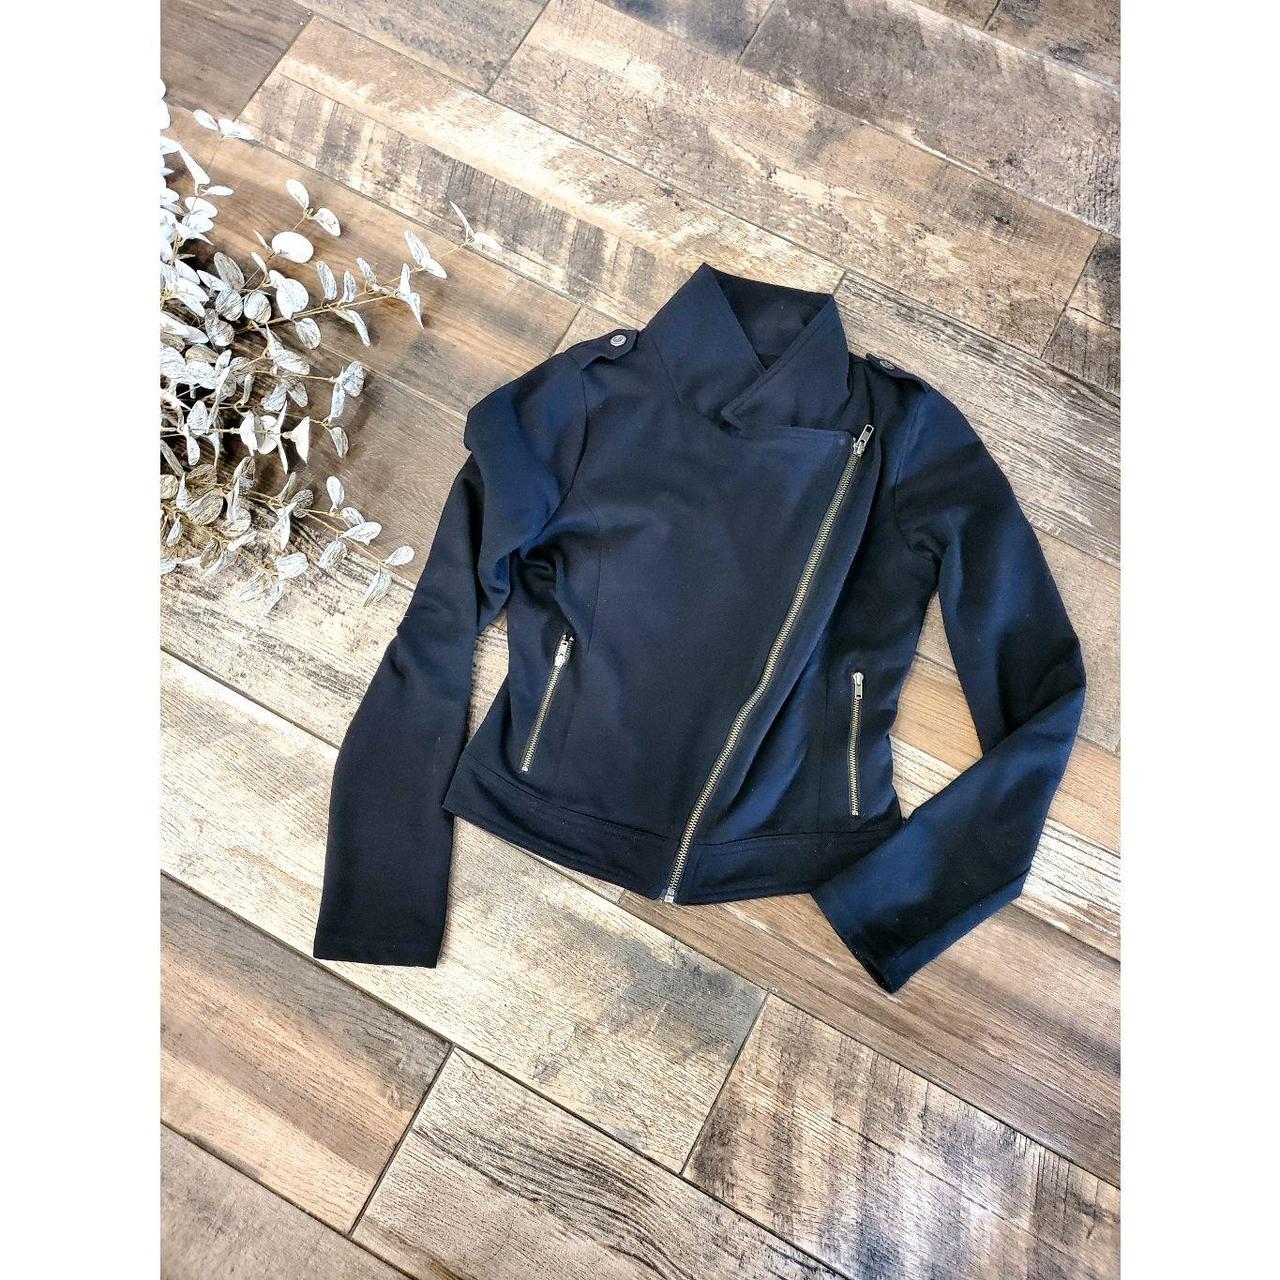 Product Image 2 - Black side zipper lightweight jacket